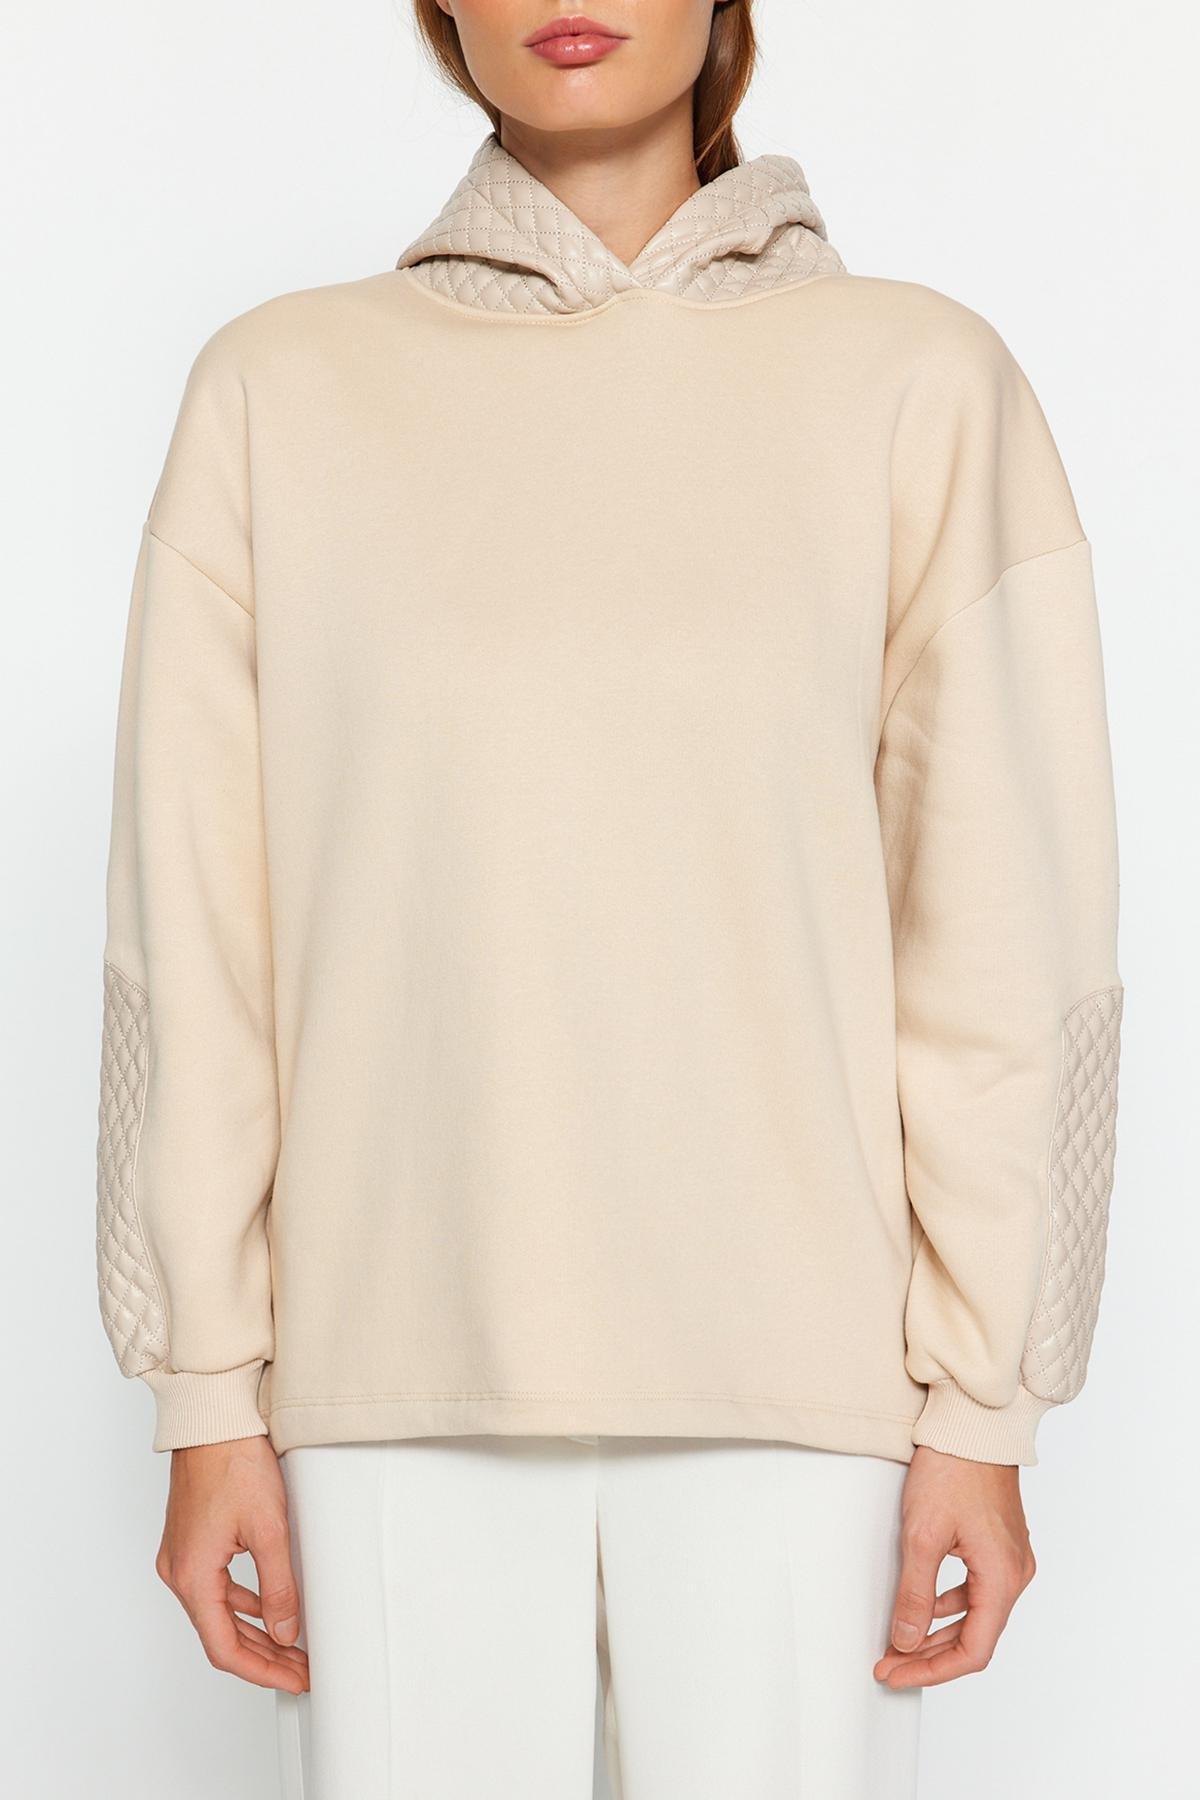 Trendyol - Beige Quilted Hooded Knitted Sweatshirt